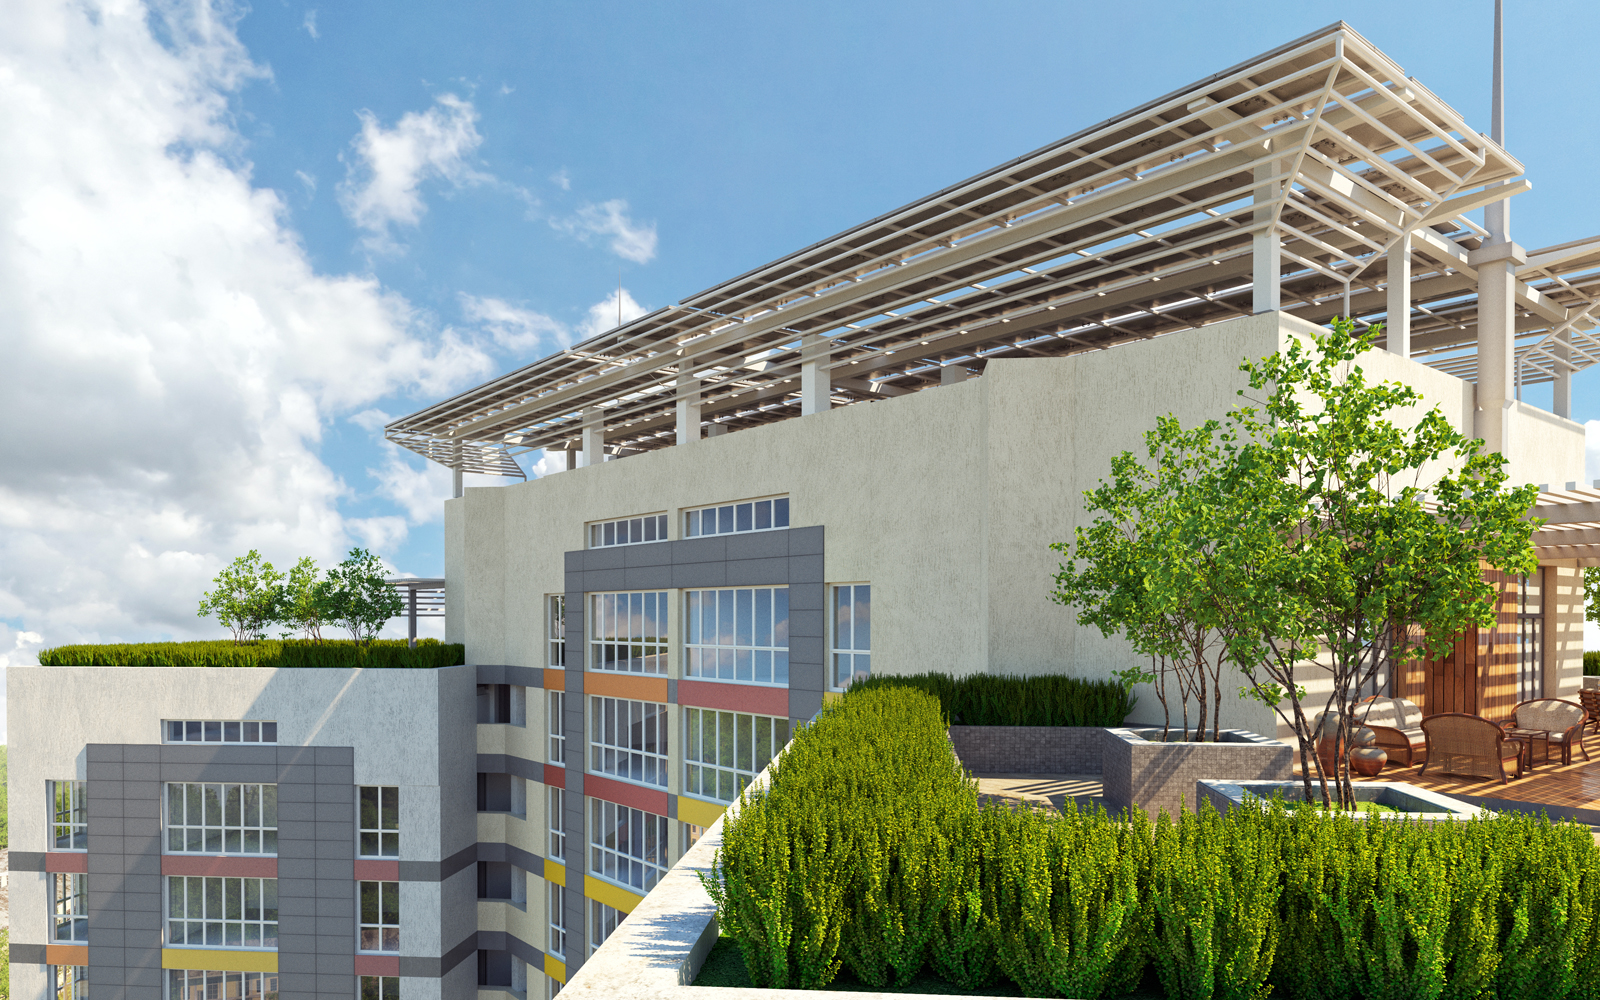 Complexo residencial "Nobel" em 3d max corona render imagem